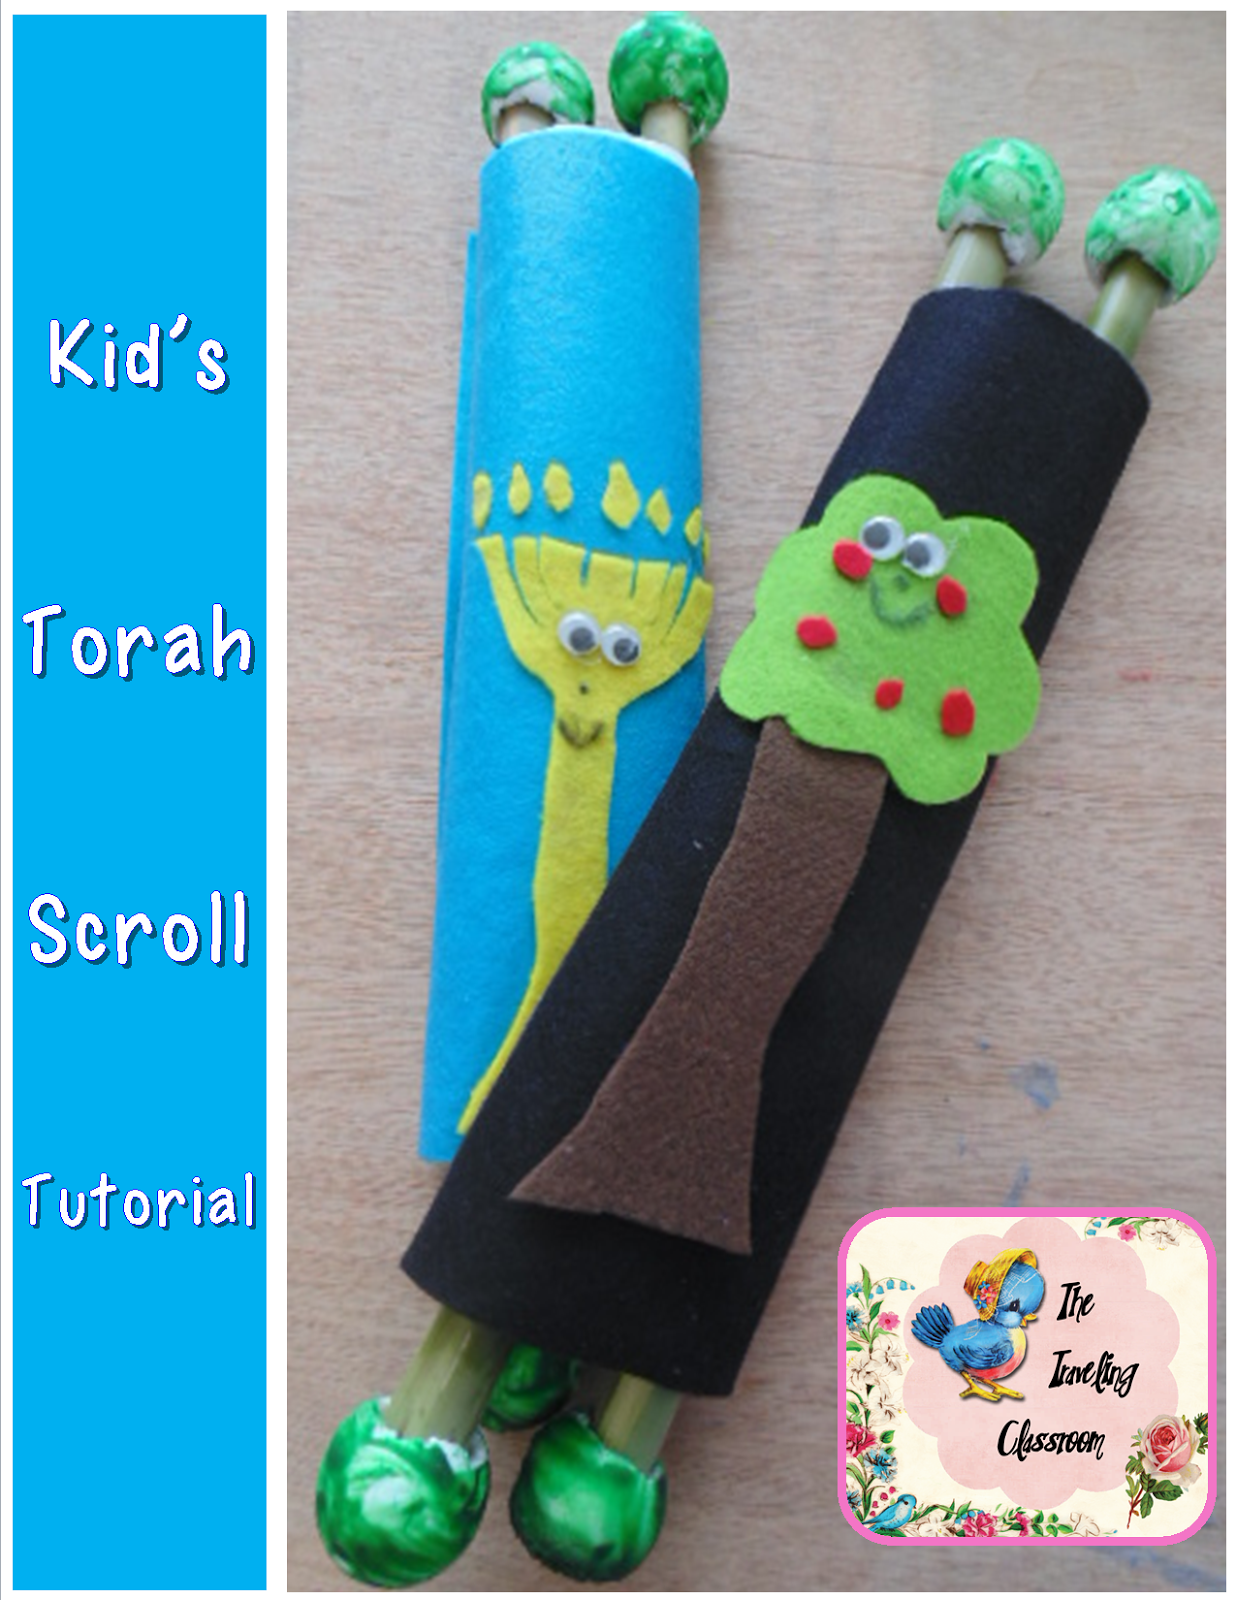 http://1.bp.blogspot.com/-wIiZaIsGscg/UzT9UviG6ZI/AAAAAAAADG4/v1F0xUL-uq8/s1600/Kid's+Torah+Scroll+Tutorial+1.png